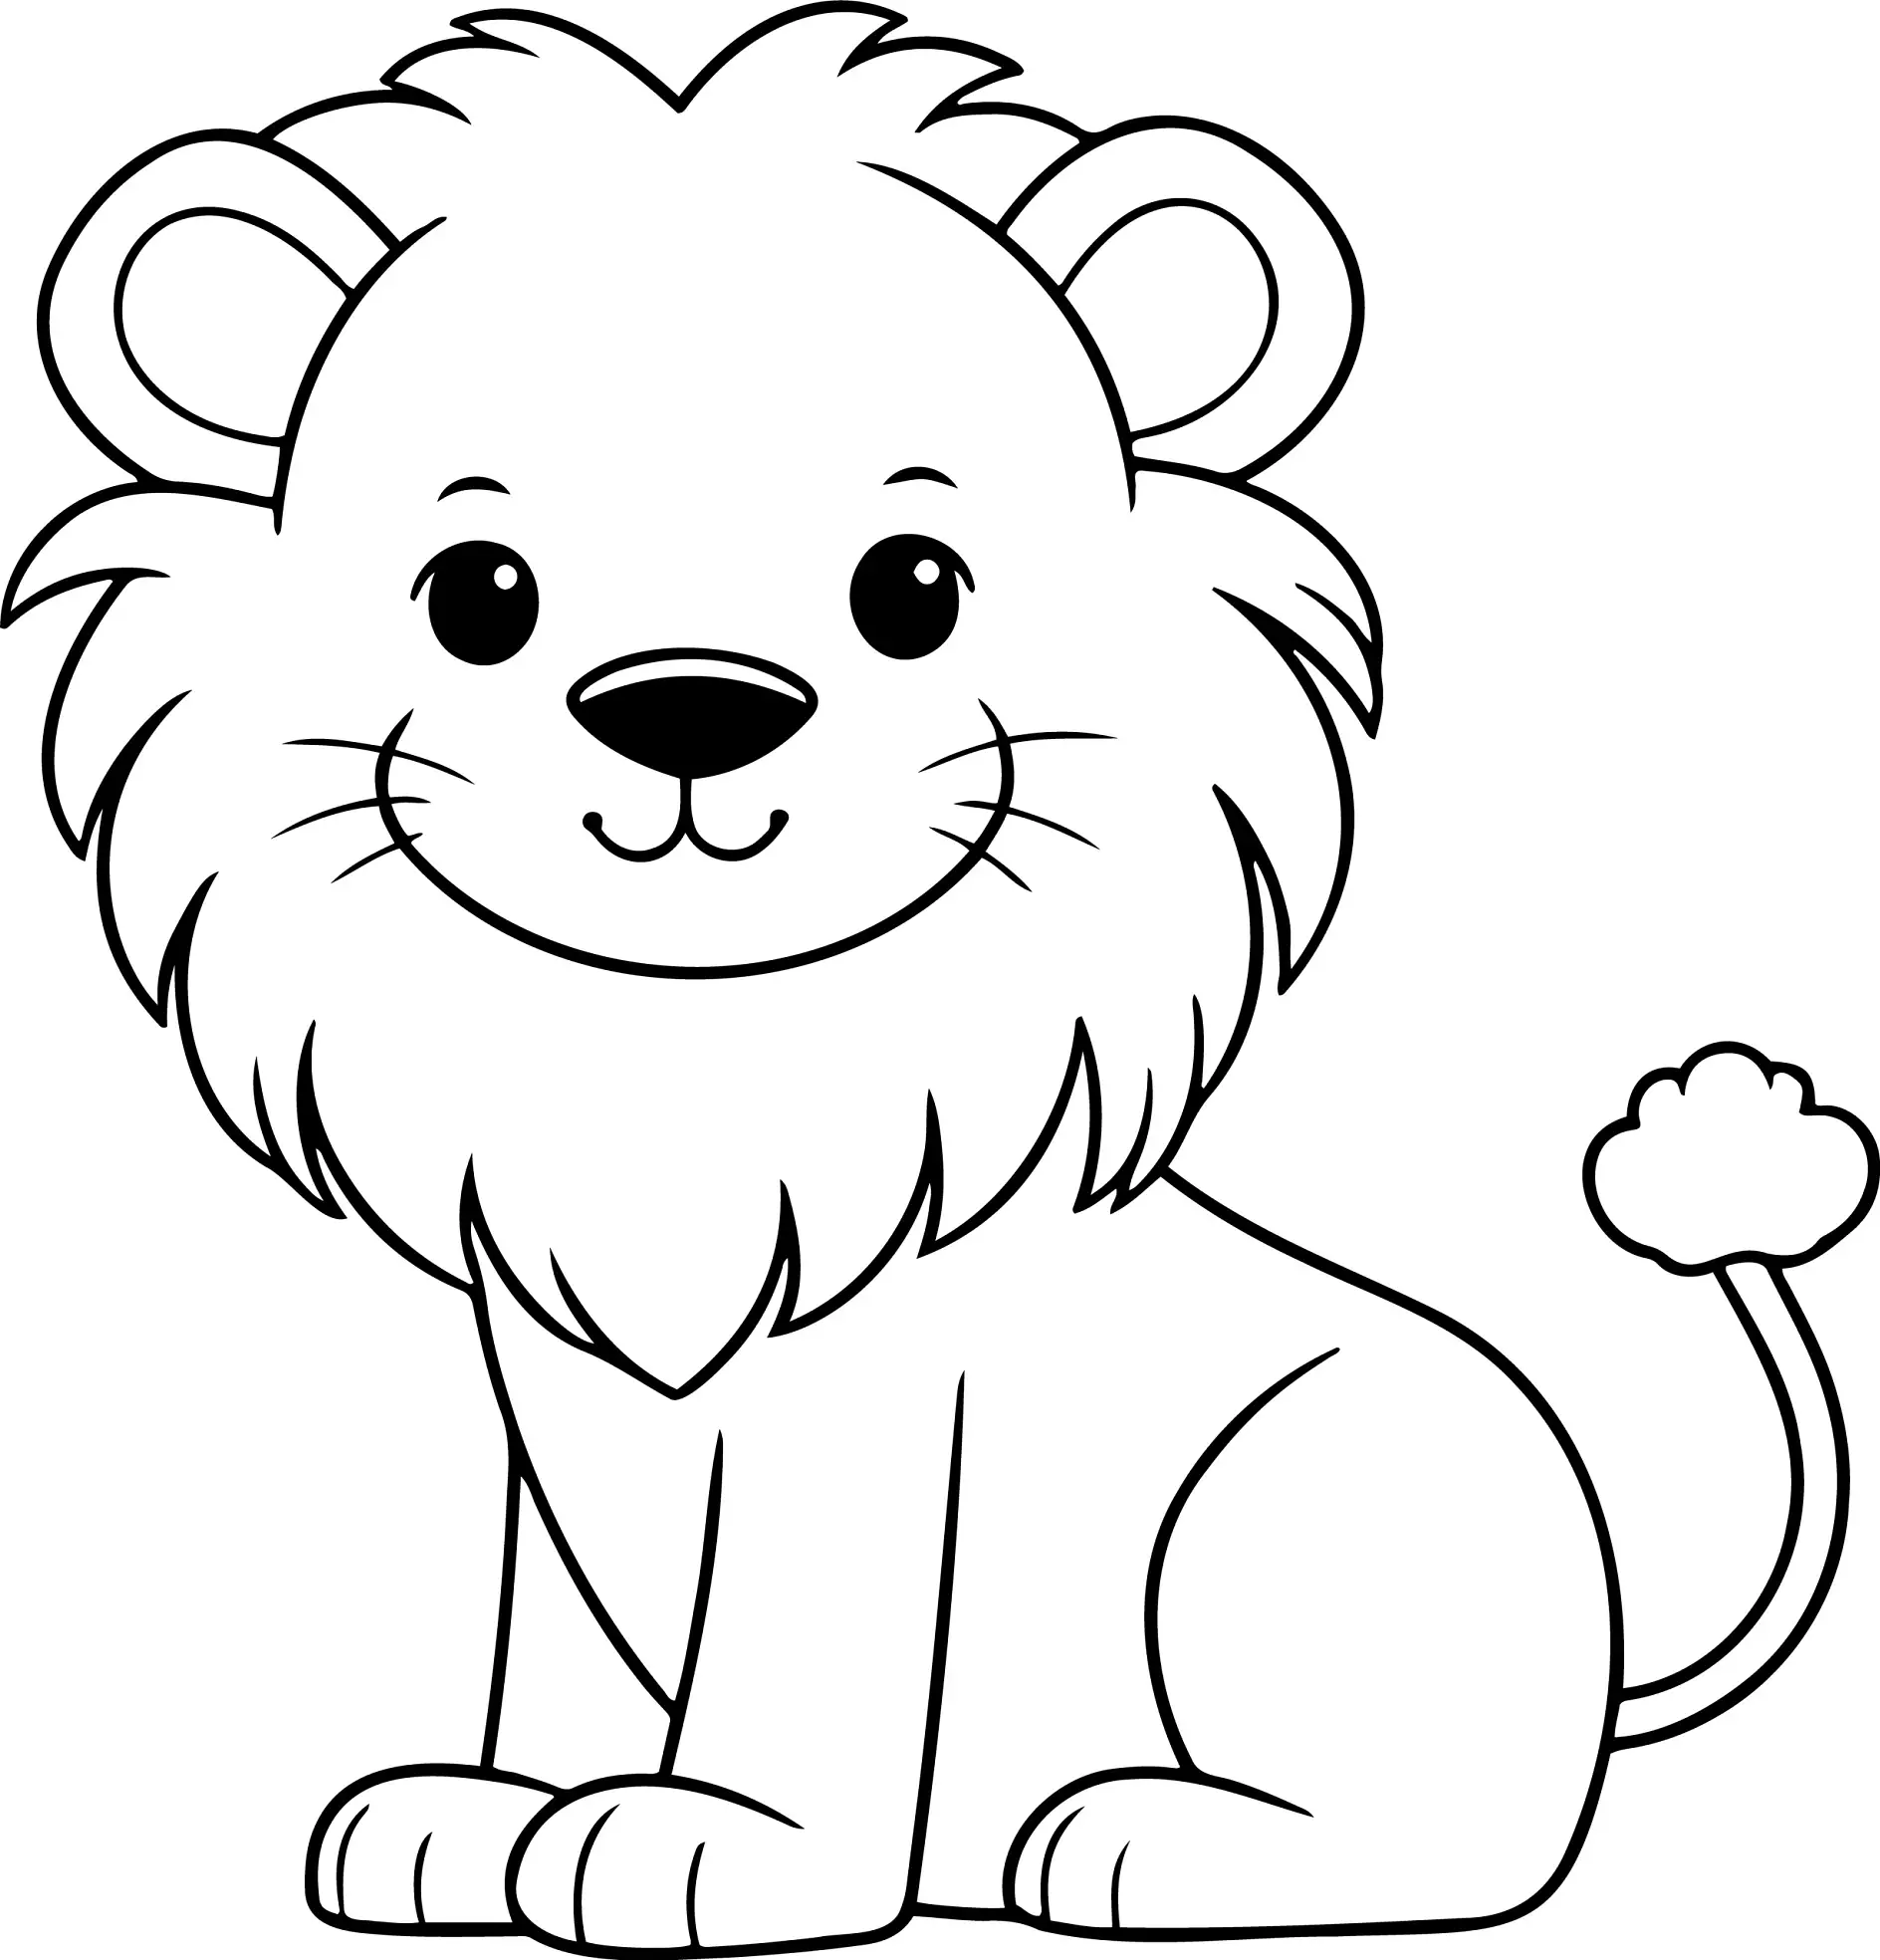 Ausmalbild kleiner Löwe sitzend lächelndLion vector illustration. Black and white outline Lion coloring book or page for children